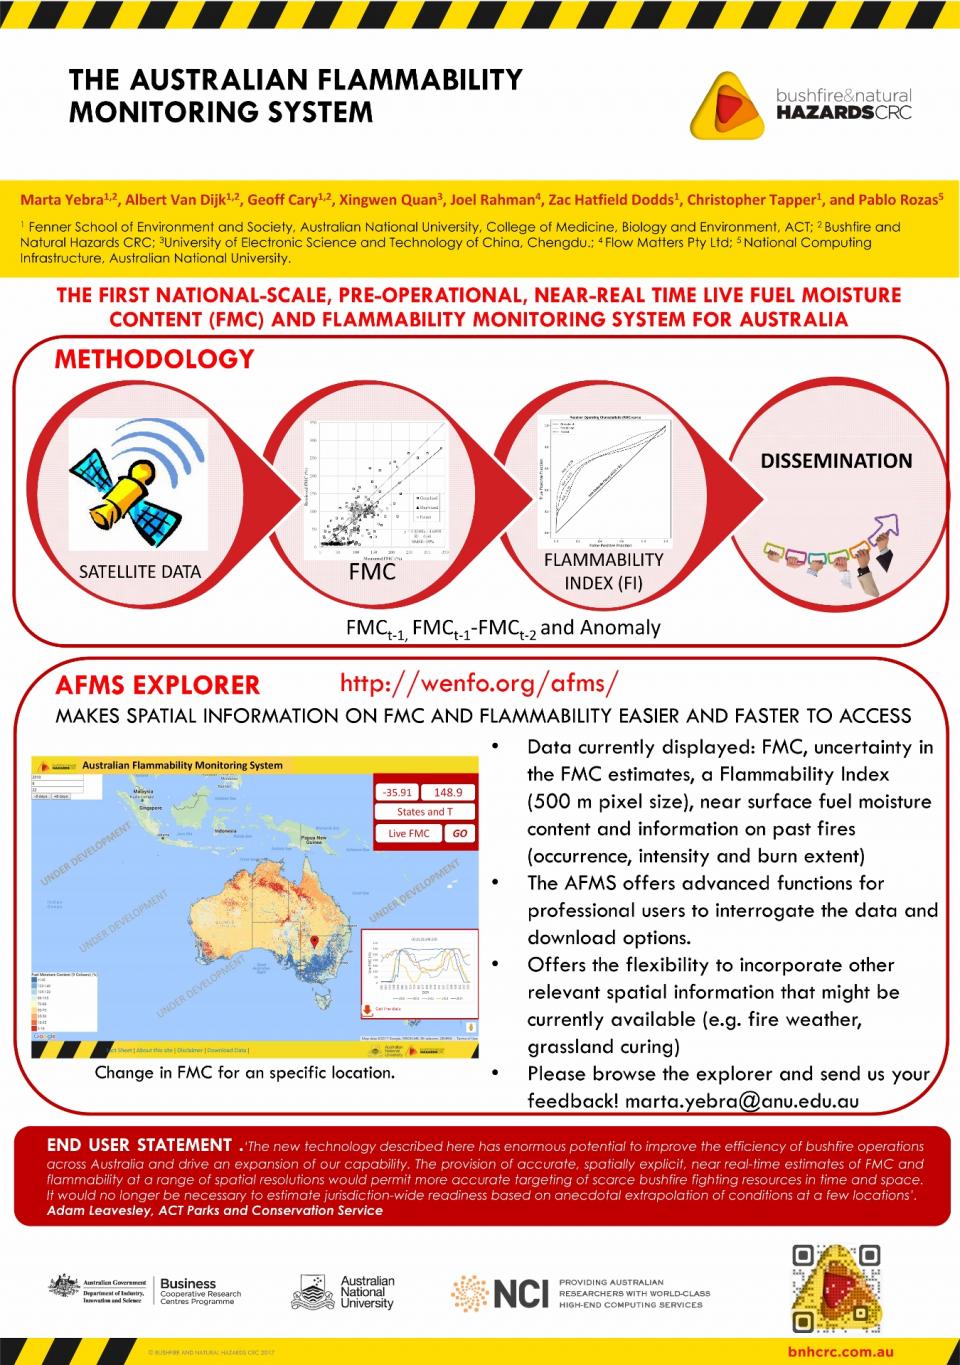 The Australian Flammability Monitoring System